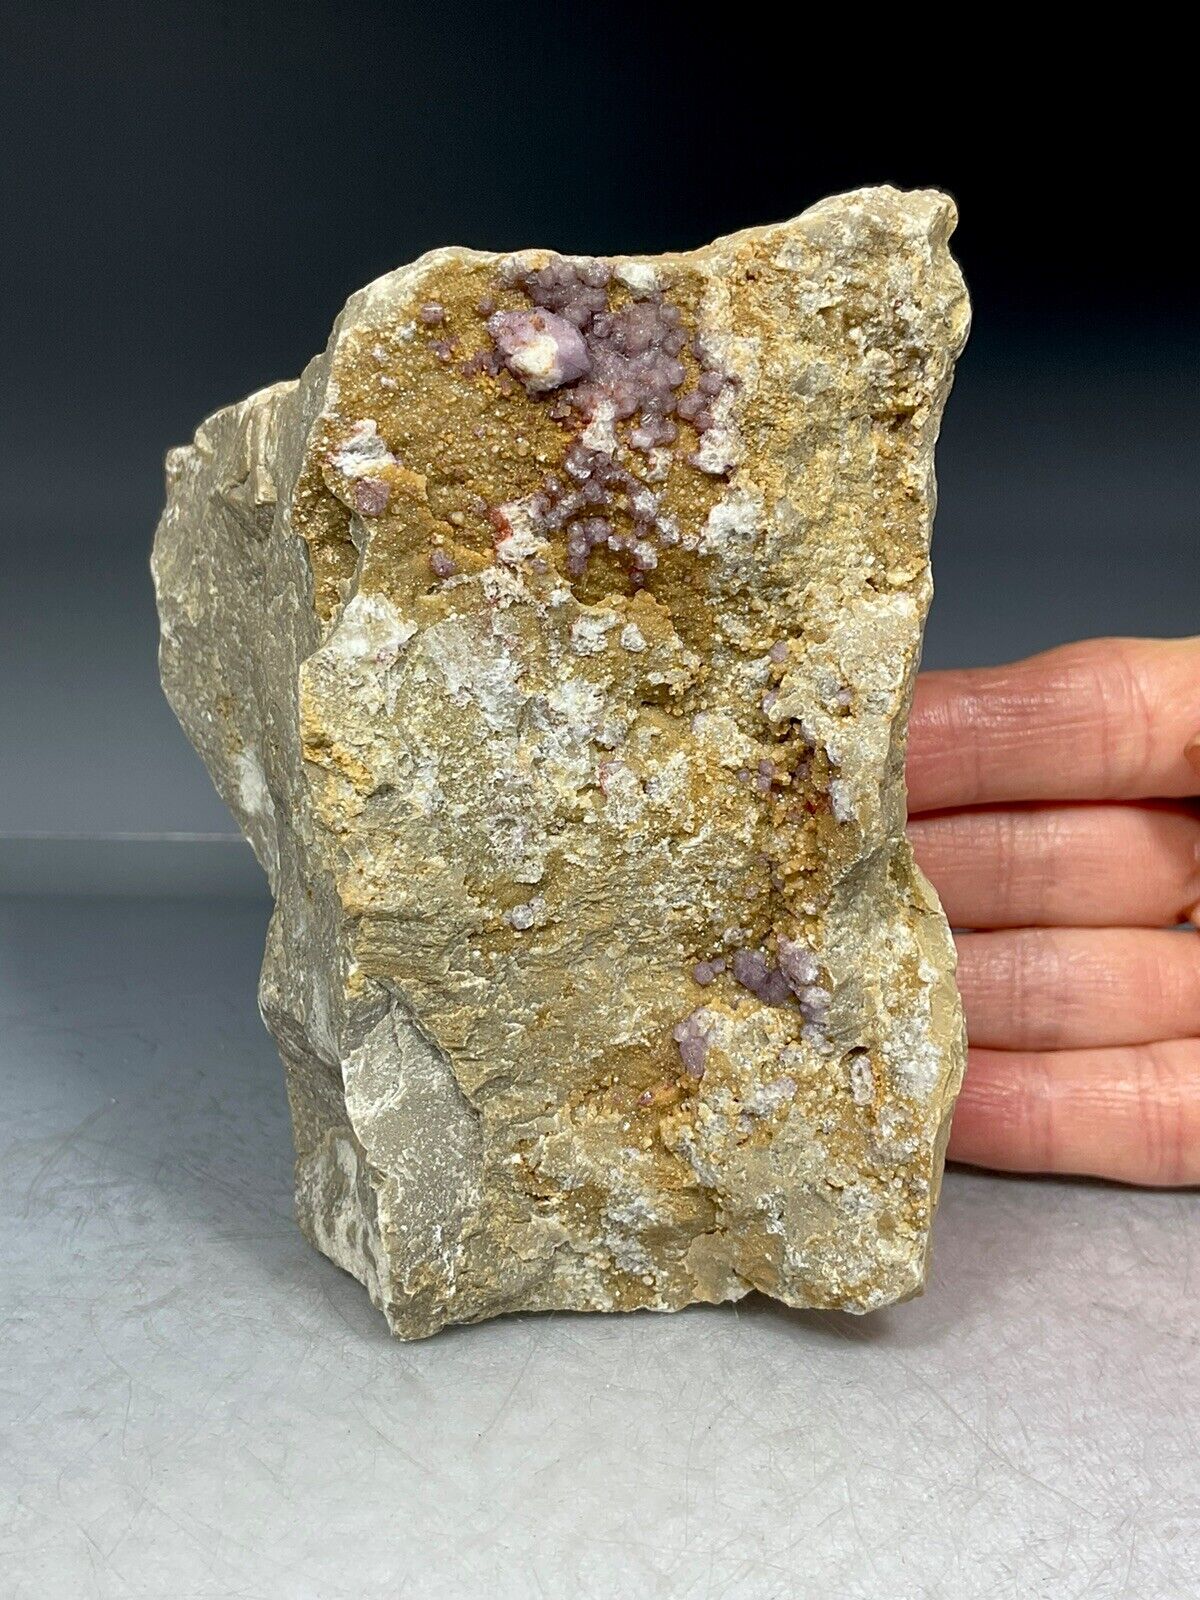 SS Rocks - Lavender Fluorite, Calcite, Quartz ( Green Lake, Wisconsin) 1.85lbs